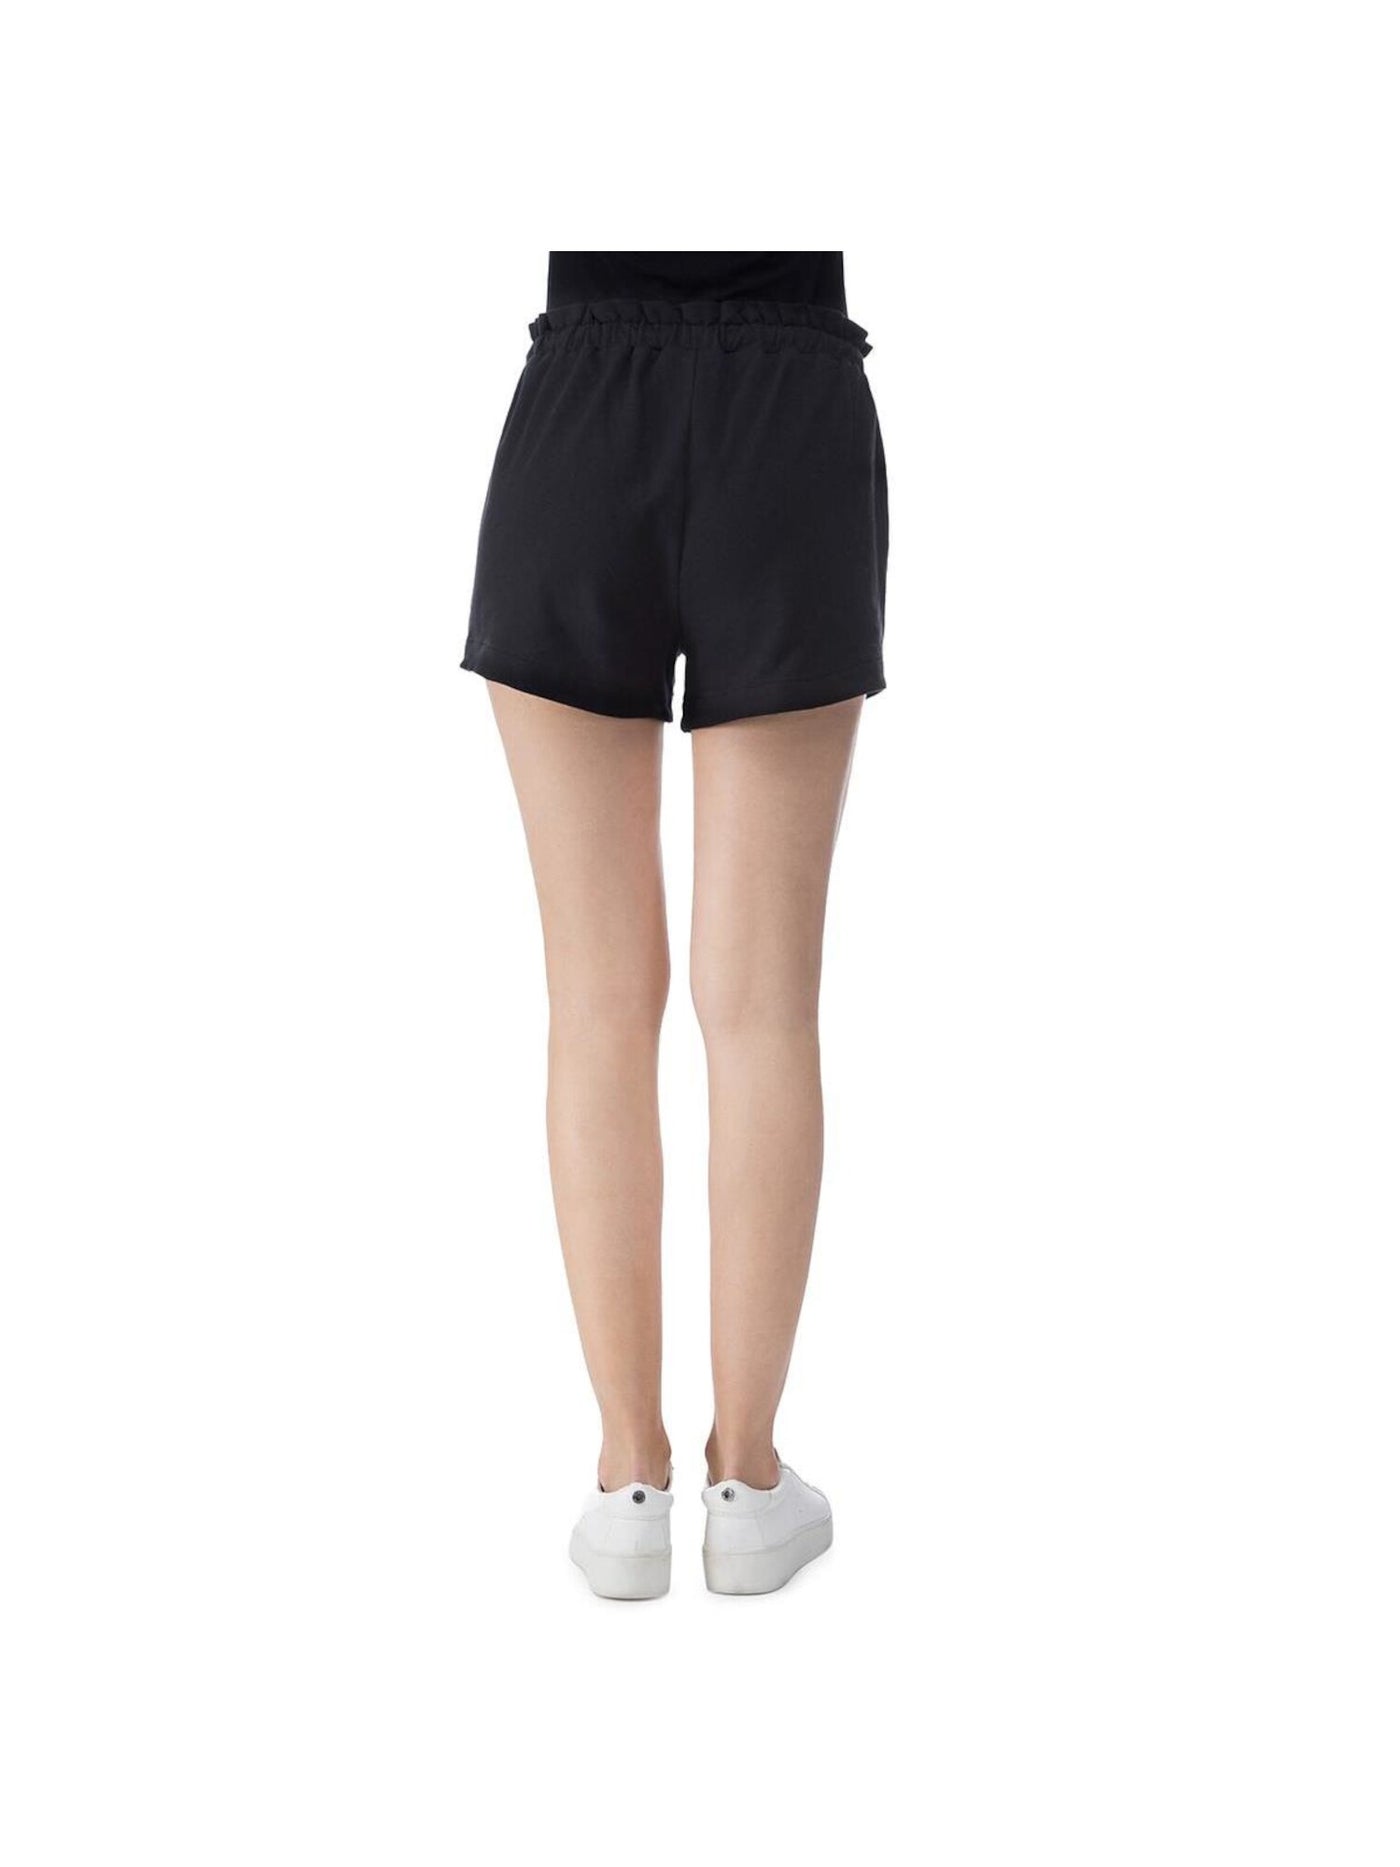 COLLECTION BY BOBEAU Womens Black Stretch Shorts XL